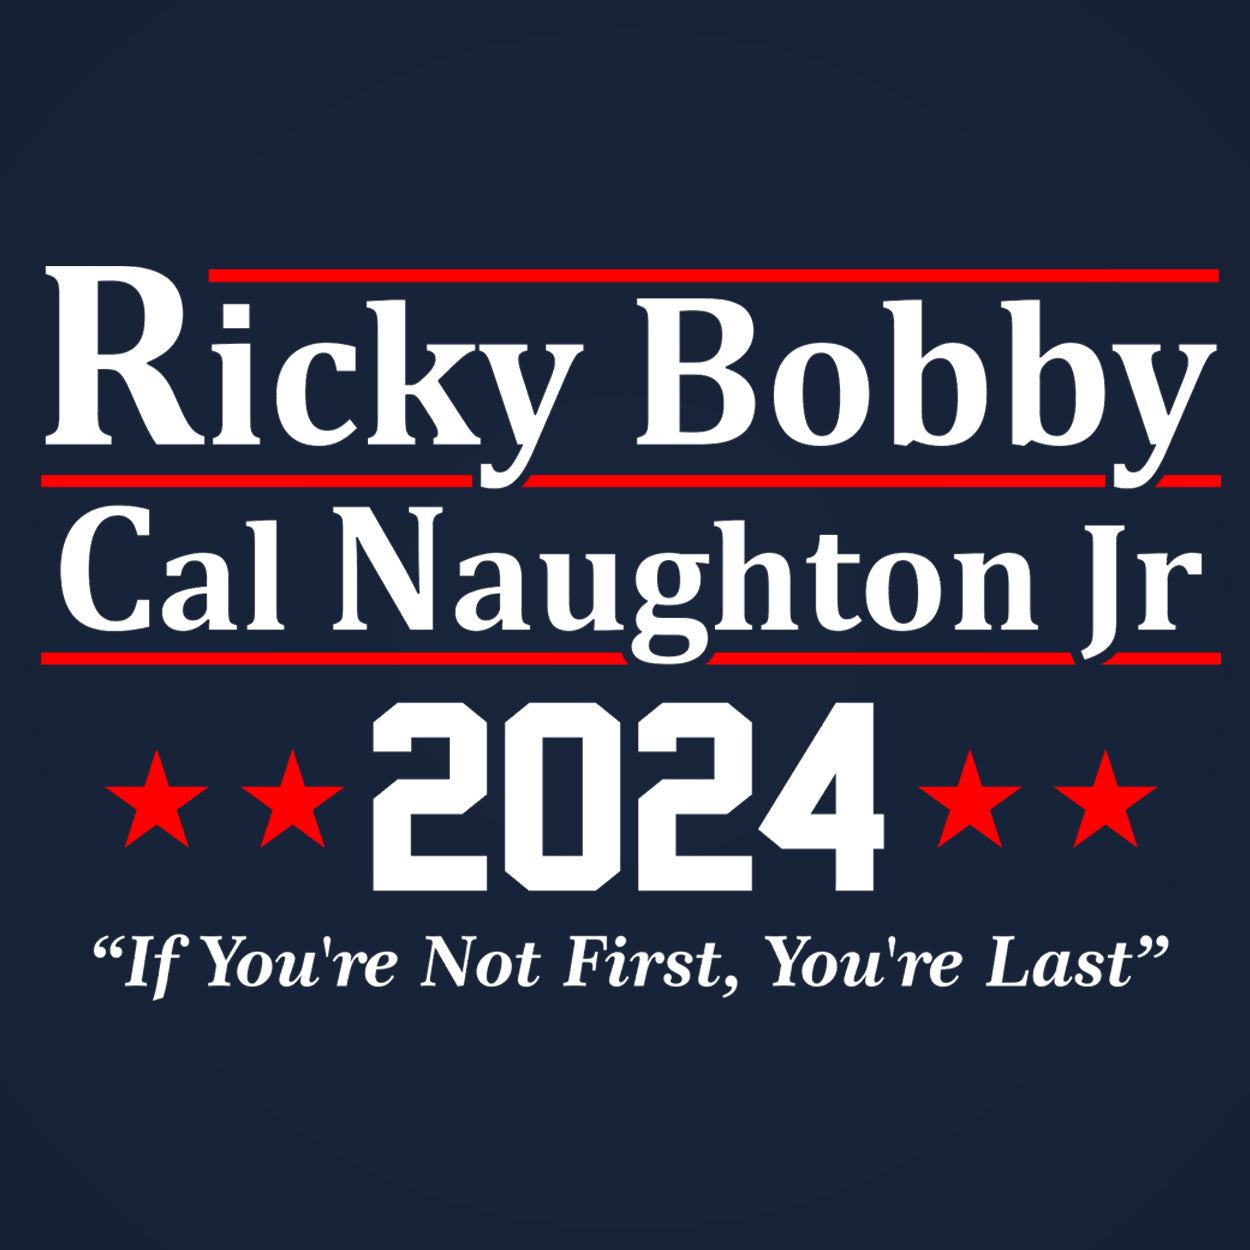 Ricky Bobby Cal Naughton Jr 2024 Election Tshirt - Donkey Tees